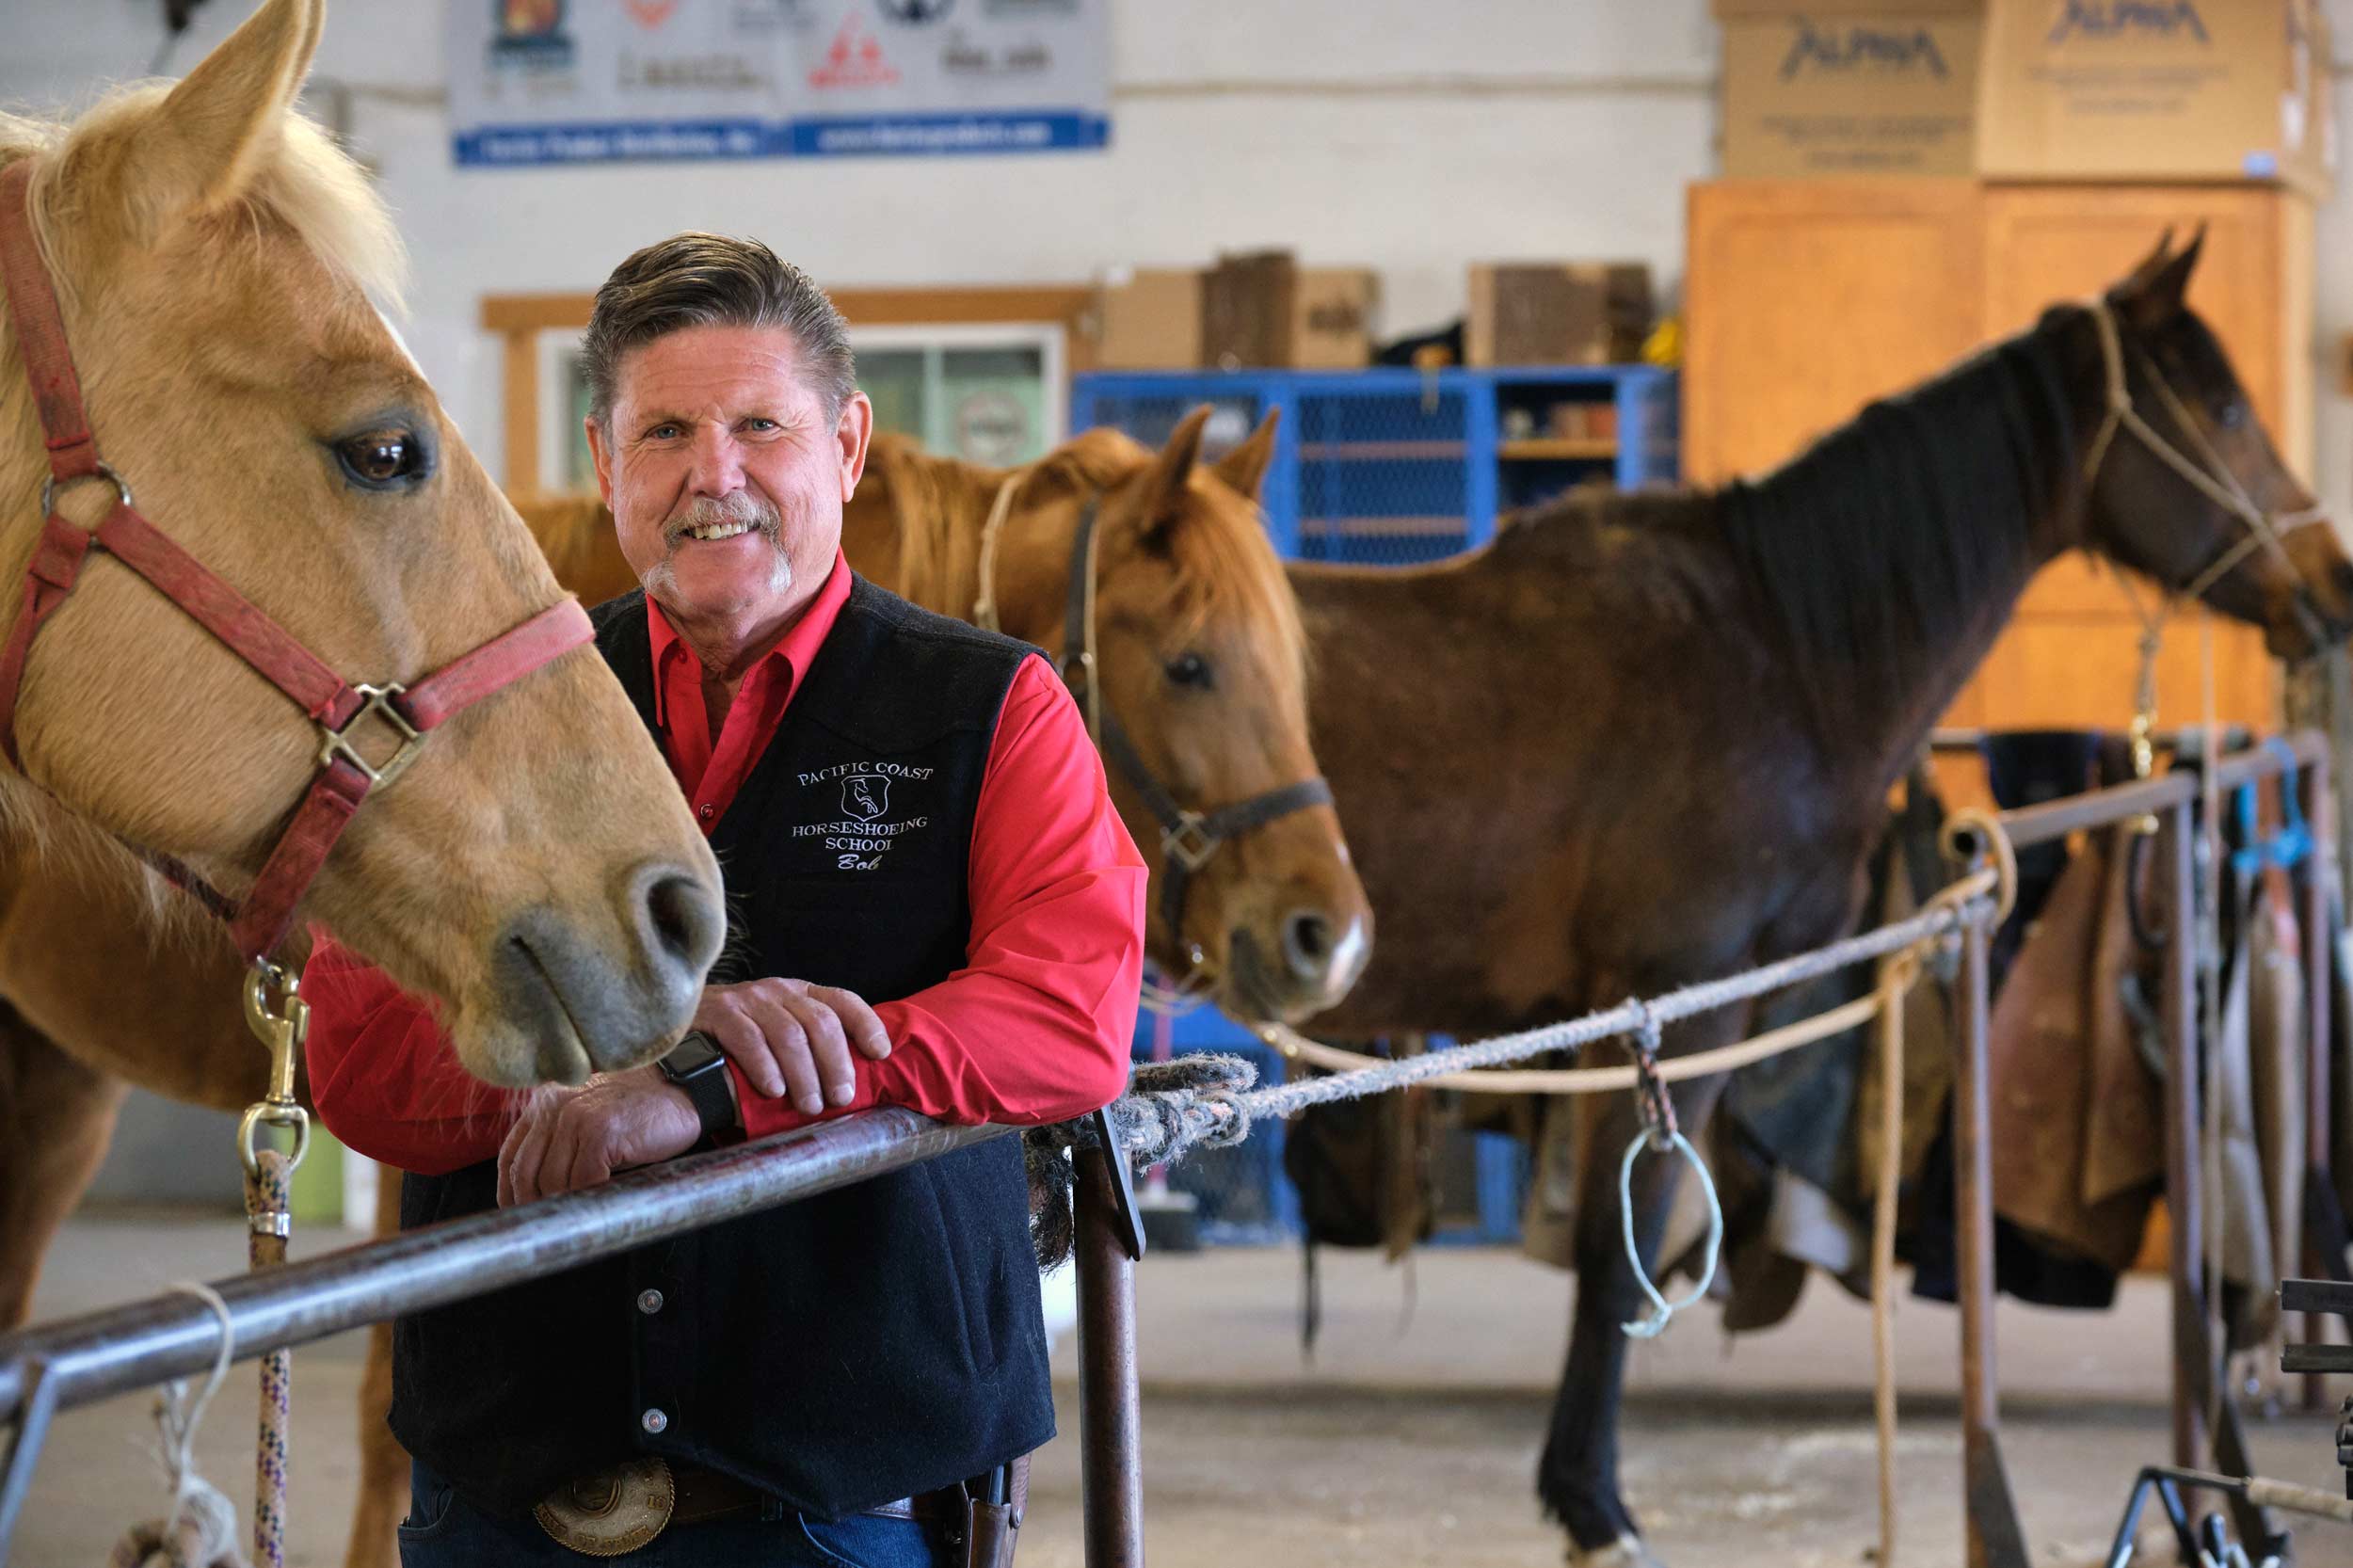 Bob Smith Poses with Horses